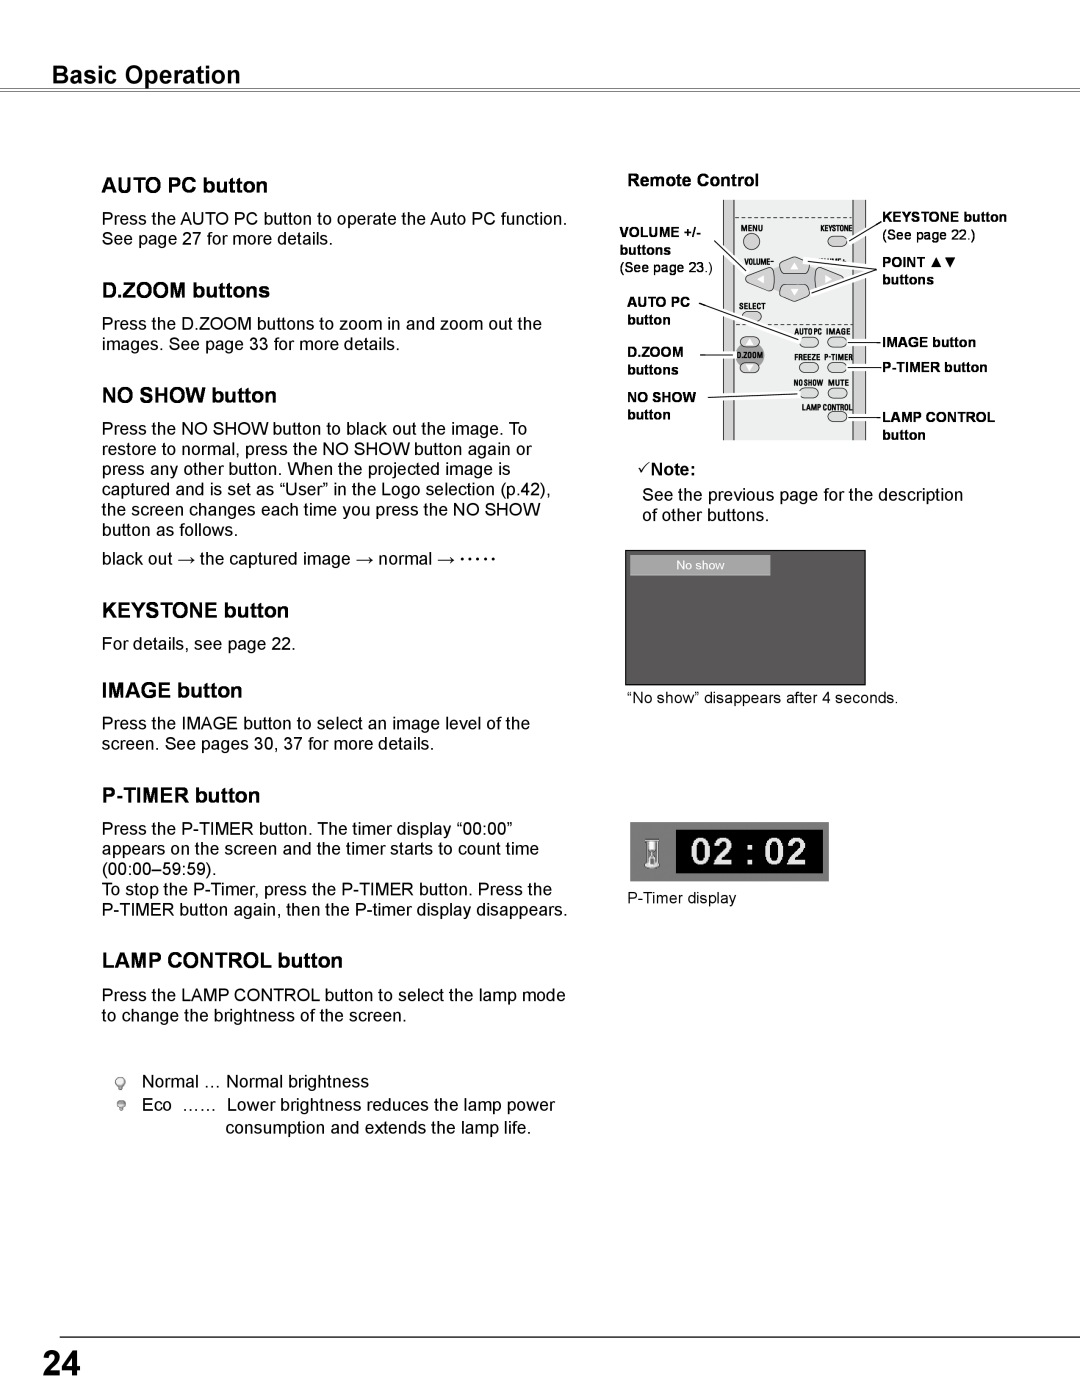 Sanyo PLC-WXE46 Basic Operation, AUTO PC button, D..ZOOM buttons, NO SHOW button, KEYSTONE button, IMAGE button, Note 